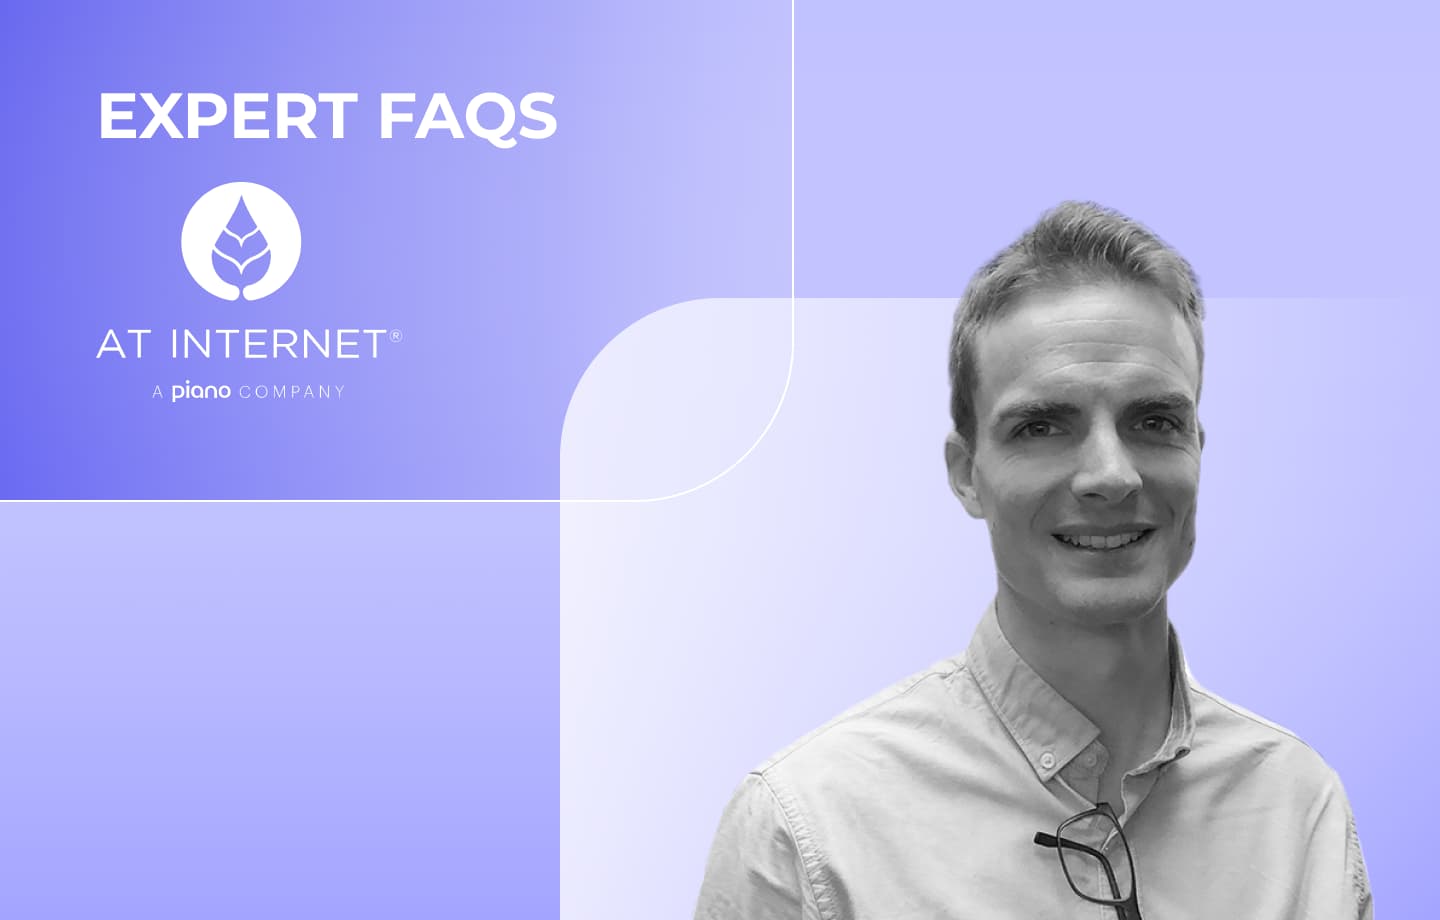 Géric Fossée, Expert FAQS AT Internet